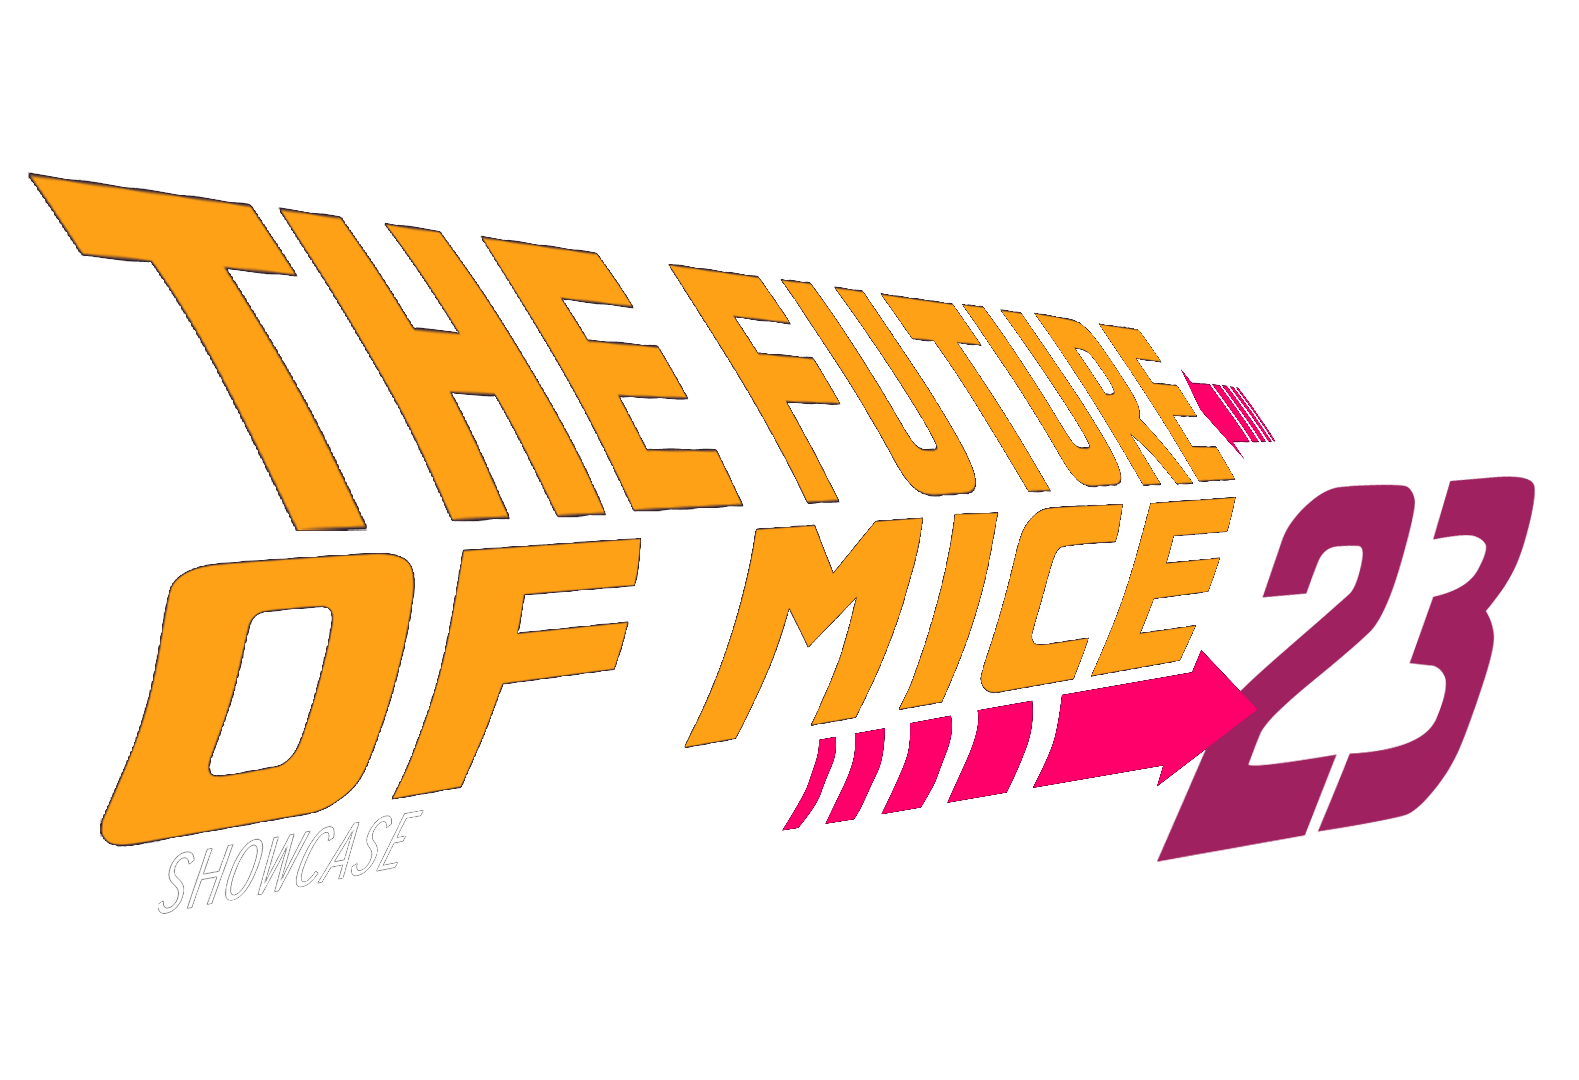 The Future of Mice